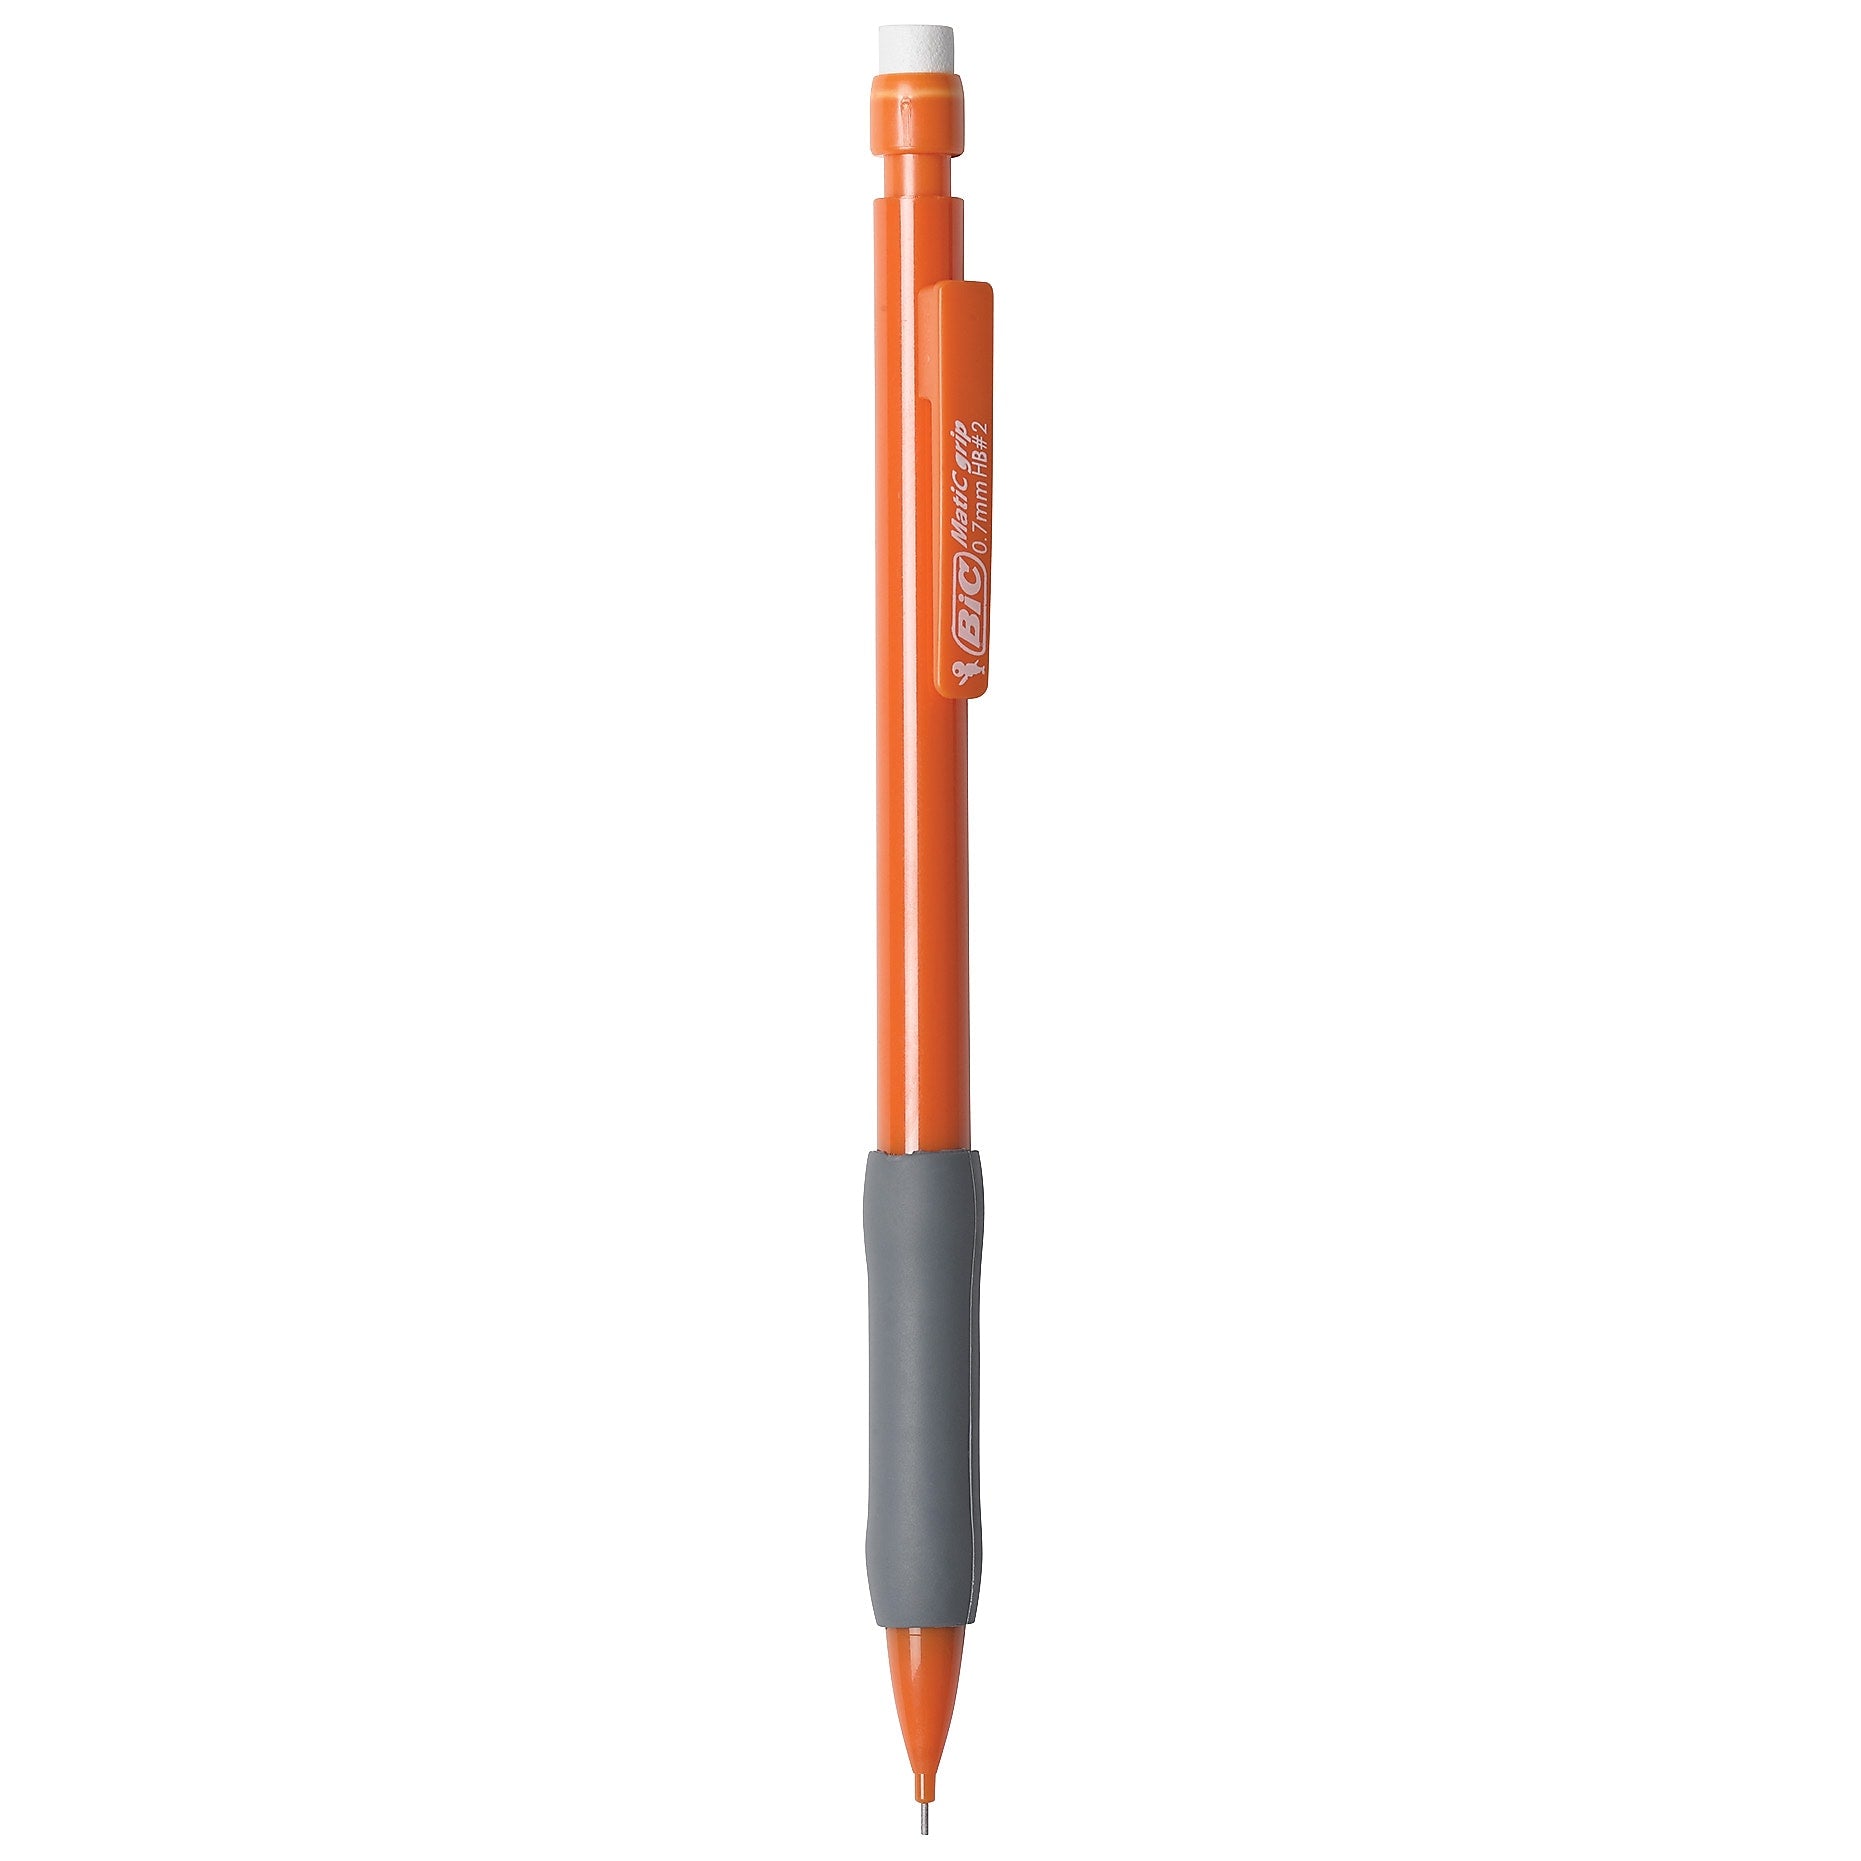 BIC Matic Grip Mechanical Pencil, 0.5mm, #2 Hard Lead, 6/Pack